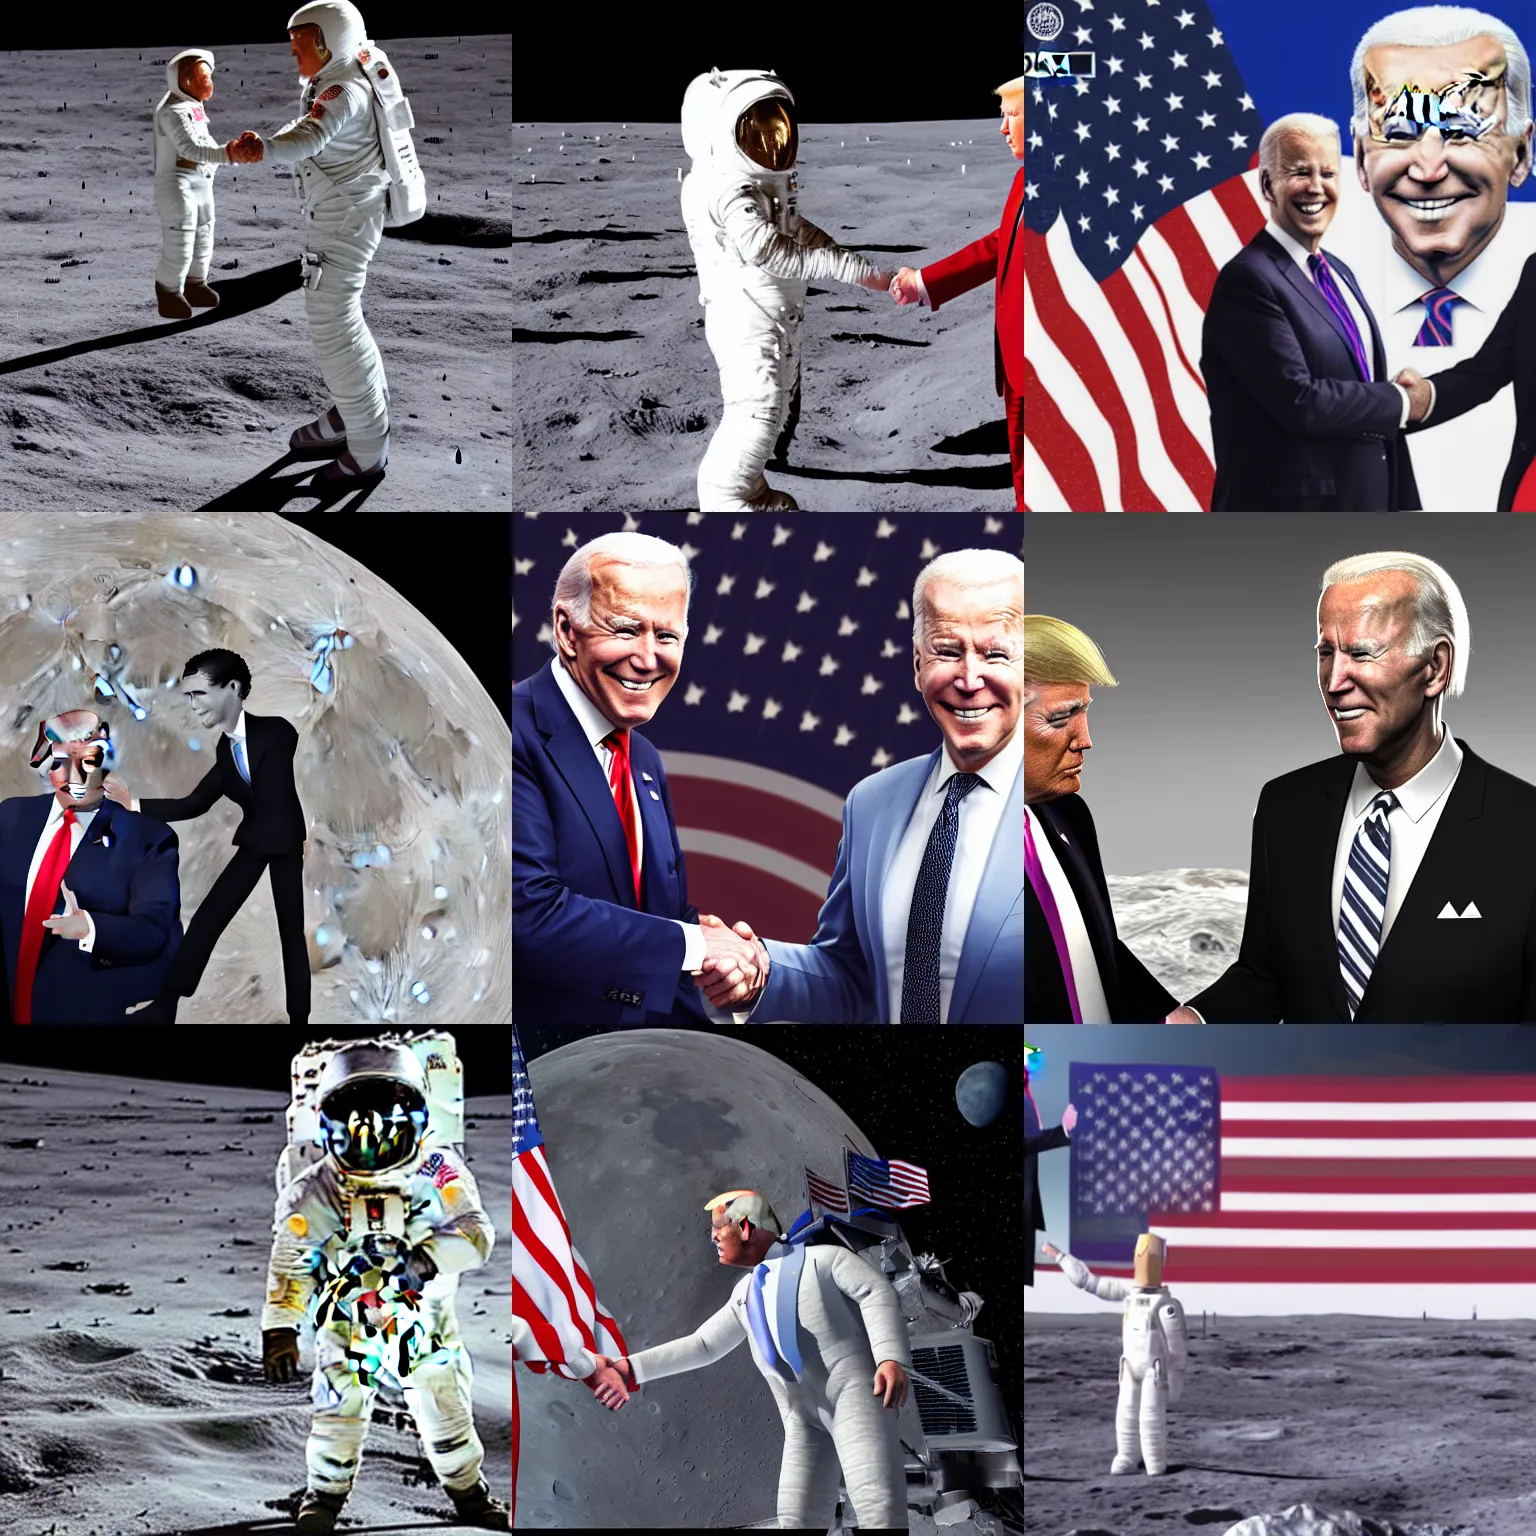 Prompt: portrait donald trump shaking hands with portrait joe biden on the moon, unreal engine 8 k